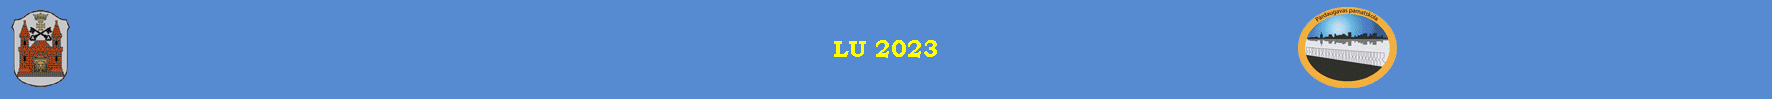 LU 2023